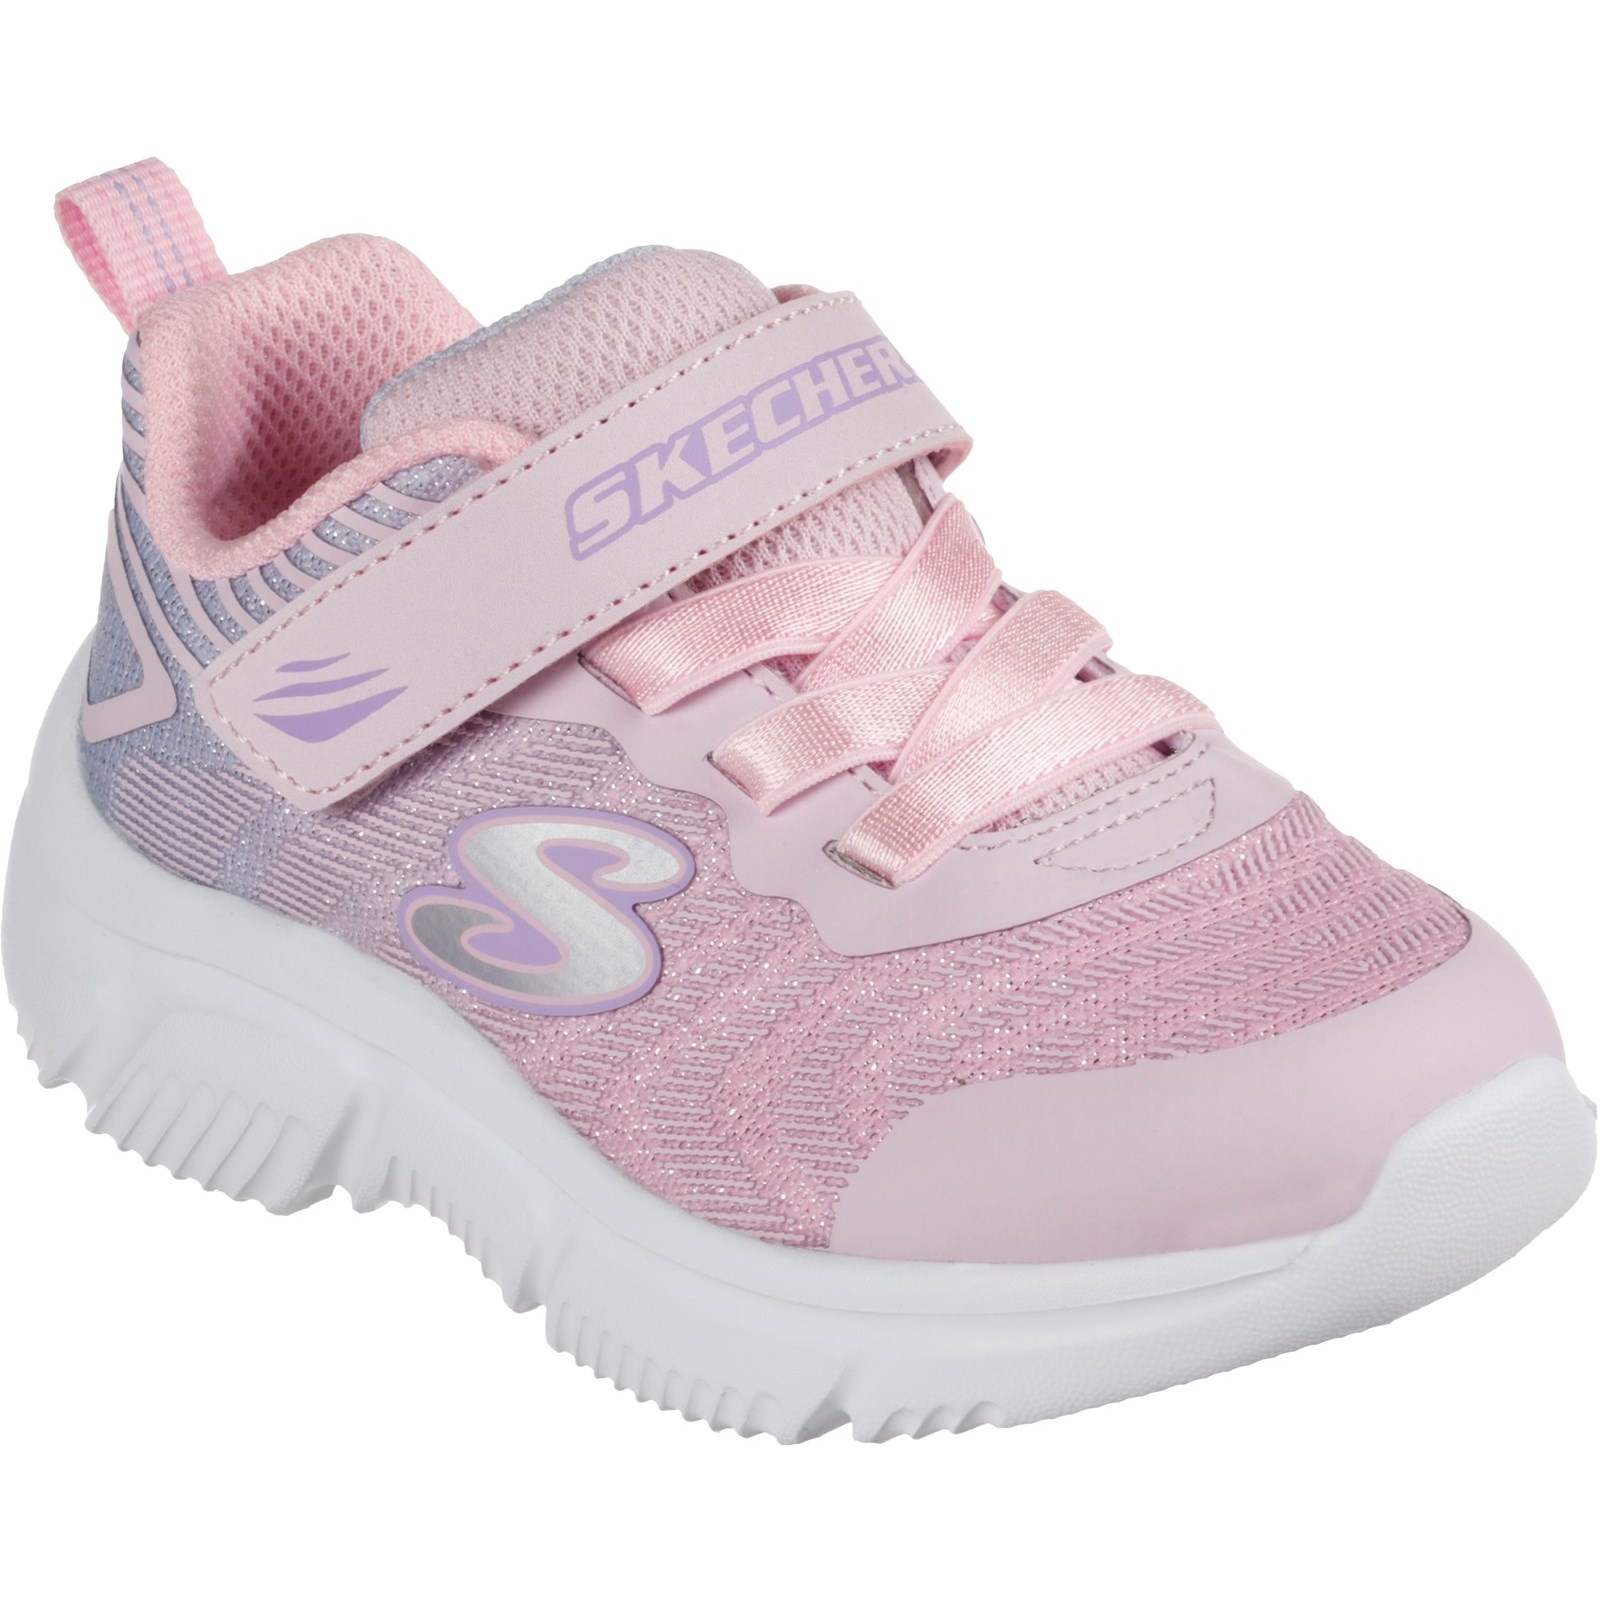 Skechers Girls Go Run 650 Fierce Flash Pink/Lavender - Shoes for Children